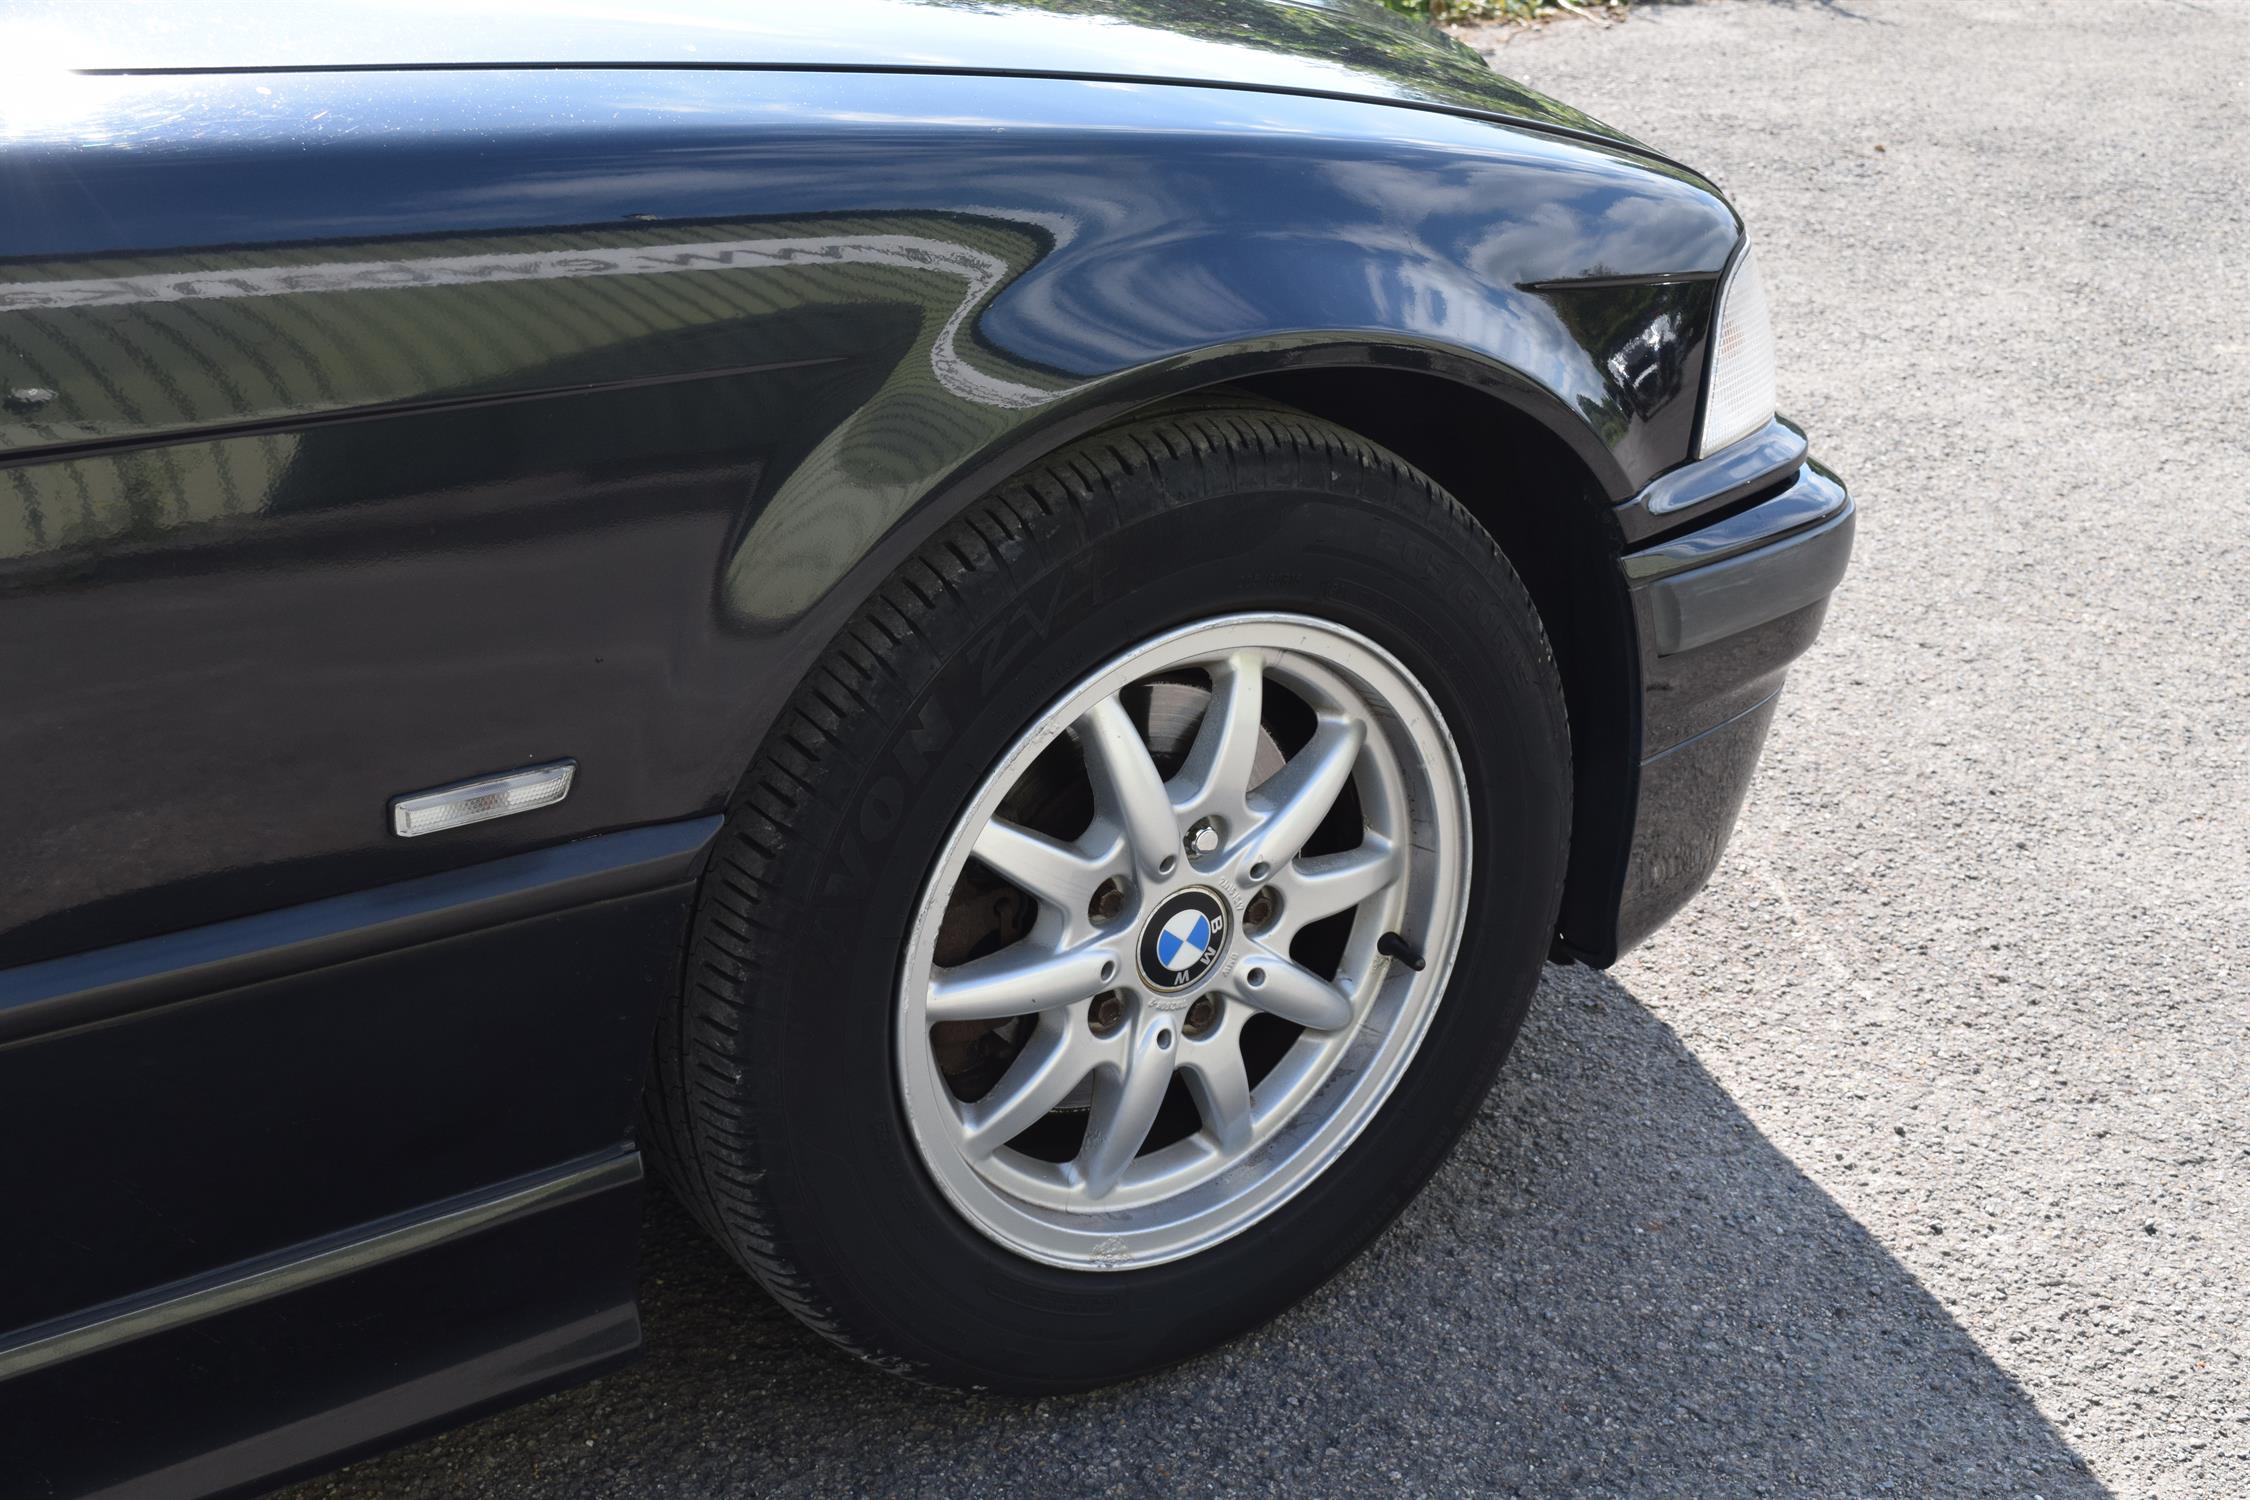 1997 BMW E36 2.5l Auto - Black on black - Odometer reading 211,000 miles, MOT’d until September - Image 7 of 20